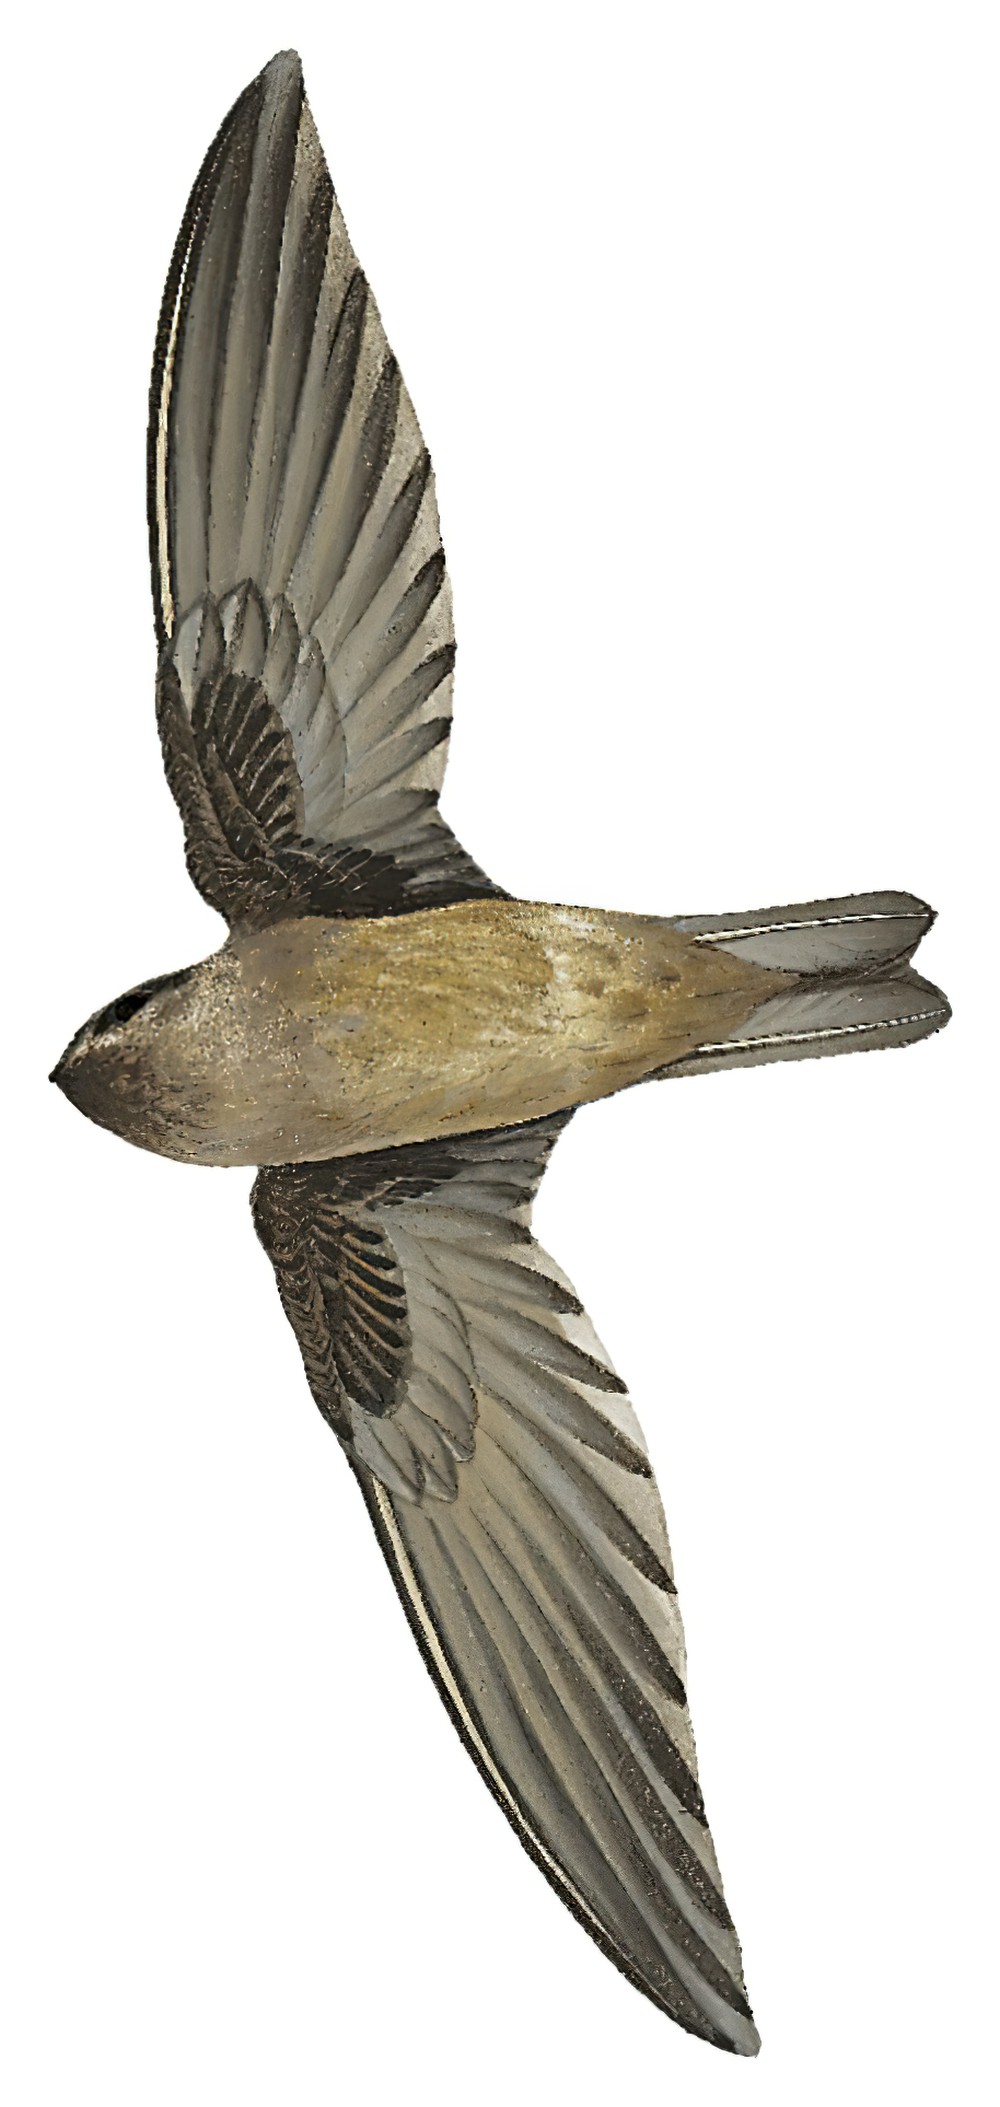 Mascarene Swiftlet / Aerodramus francicus